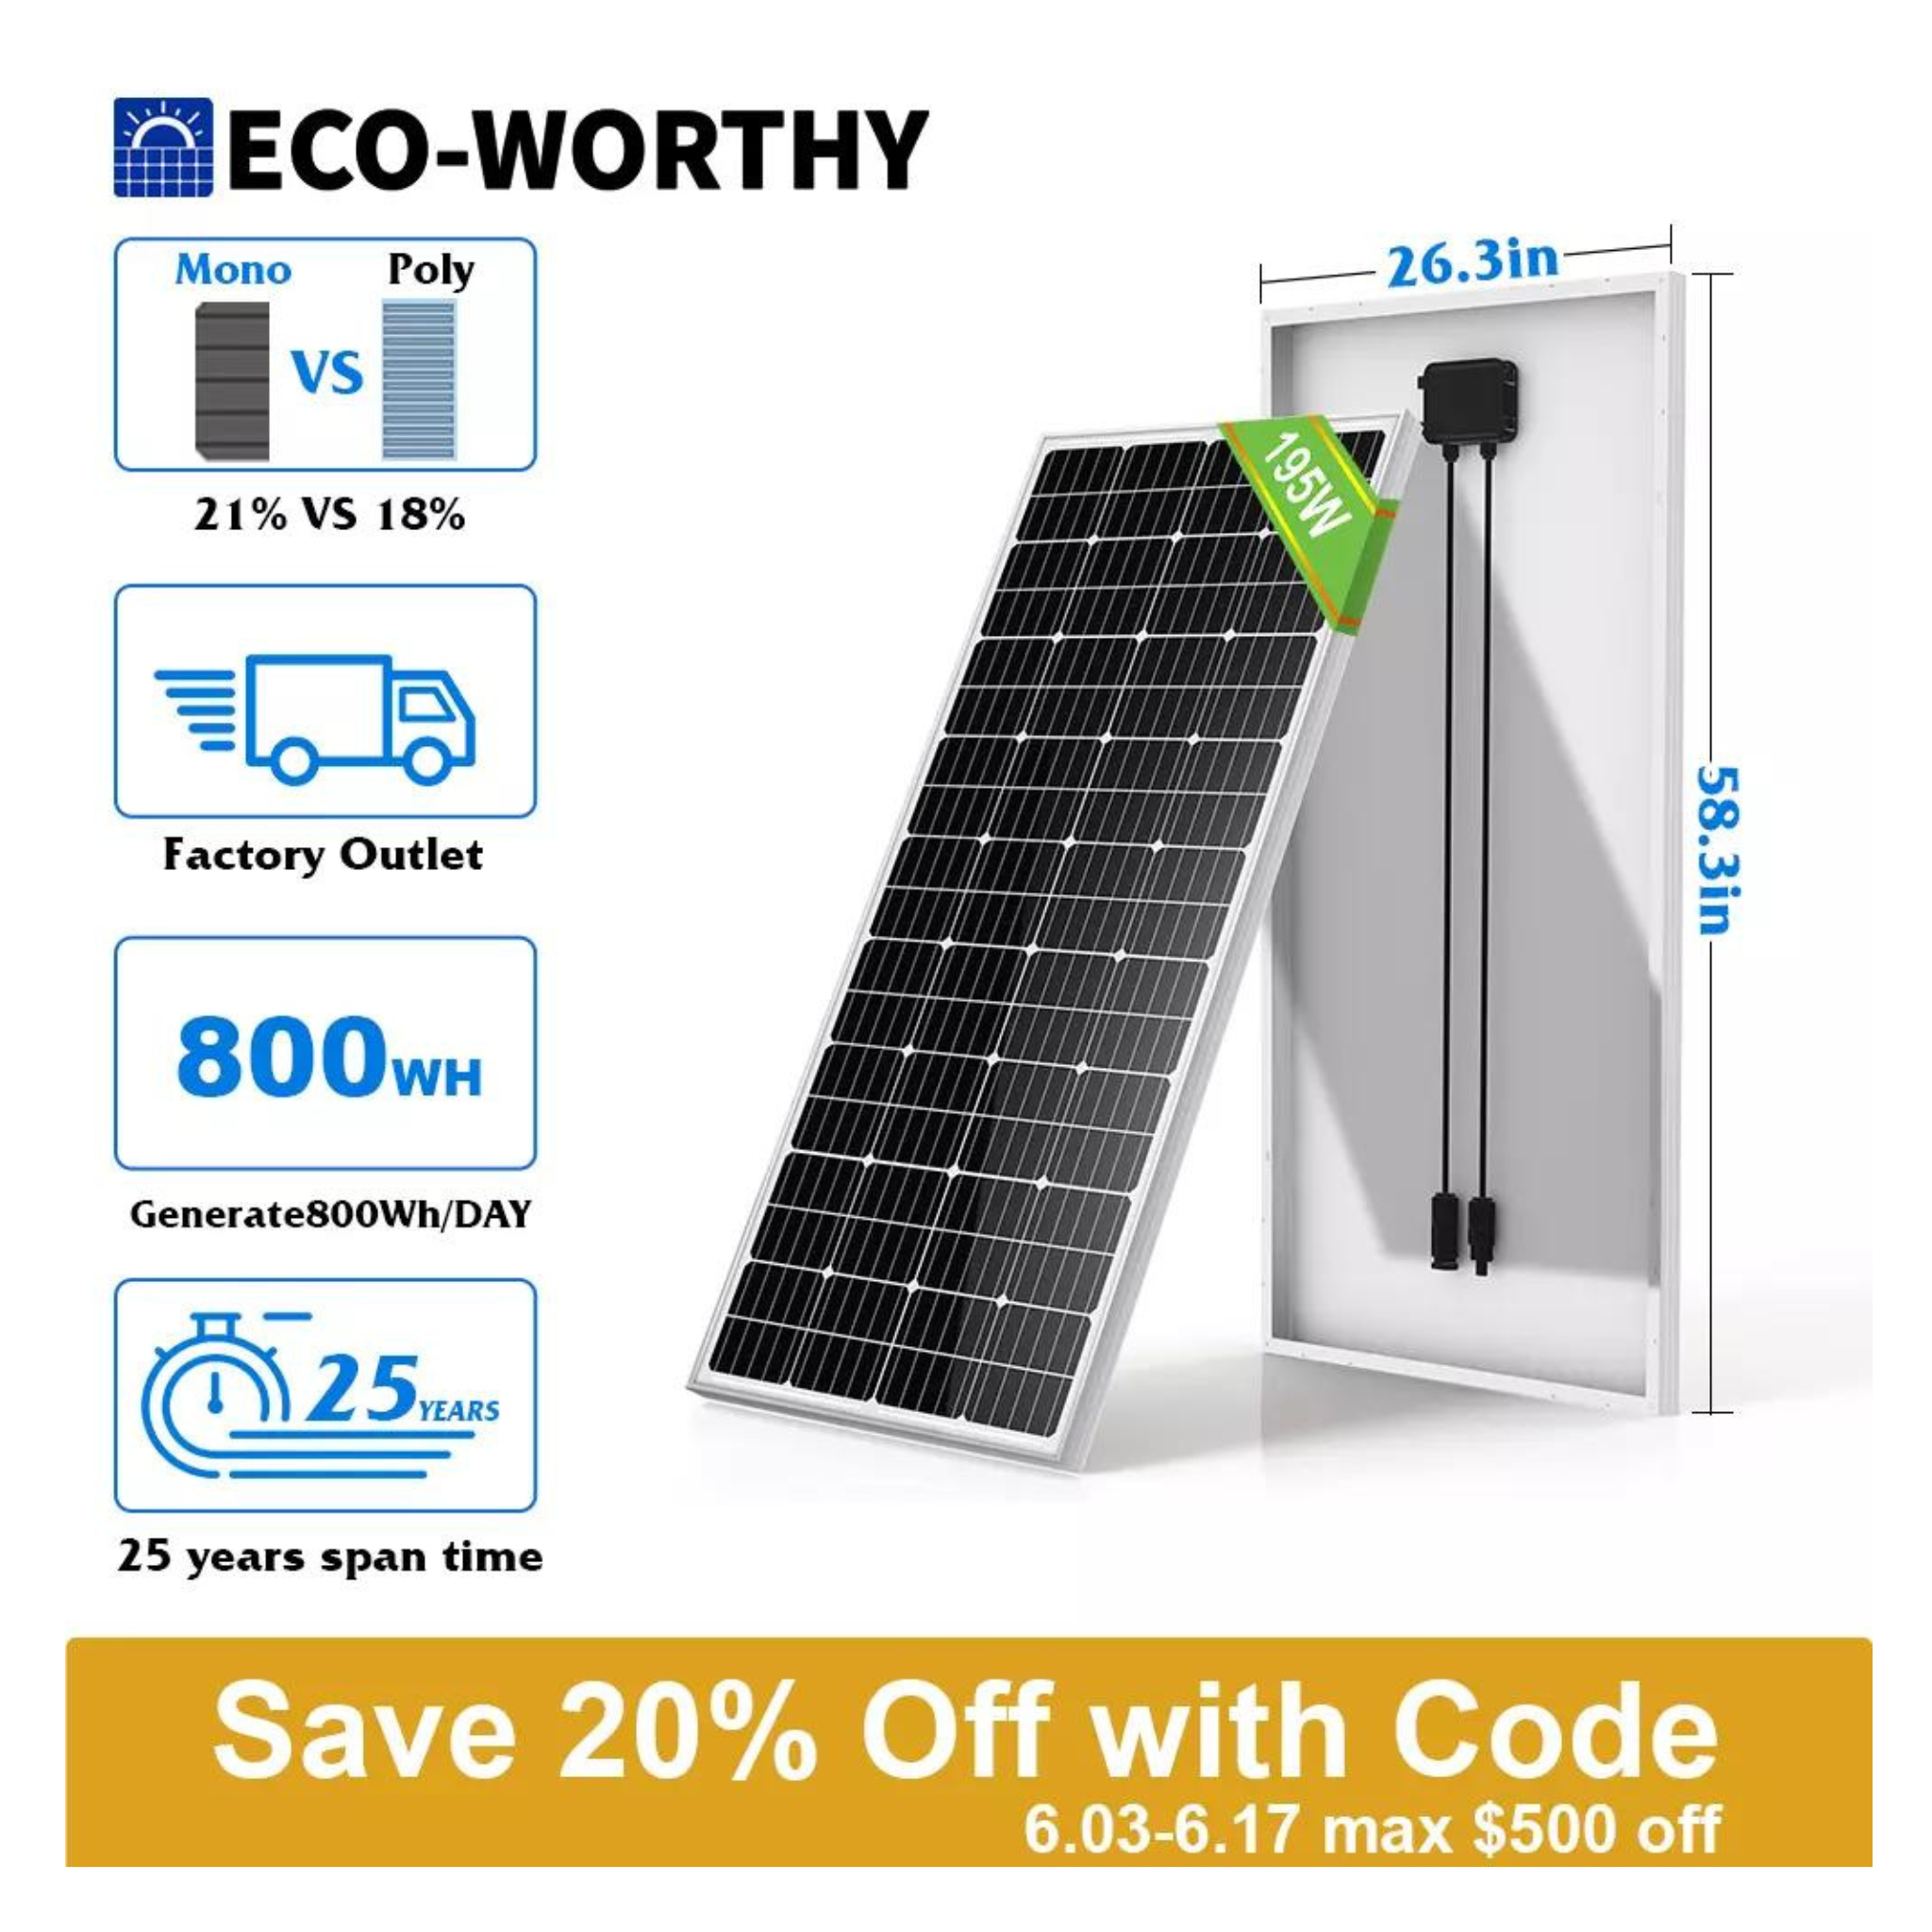 ECO-WORTHY Monocrystalline Solar Panels